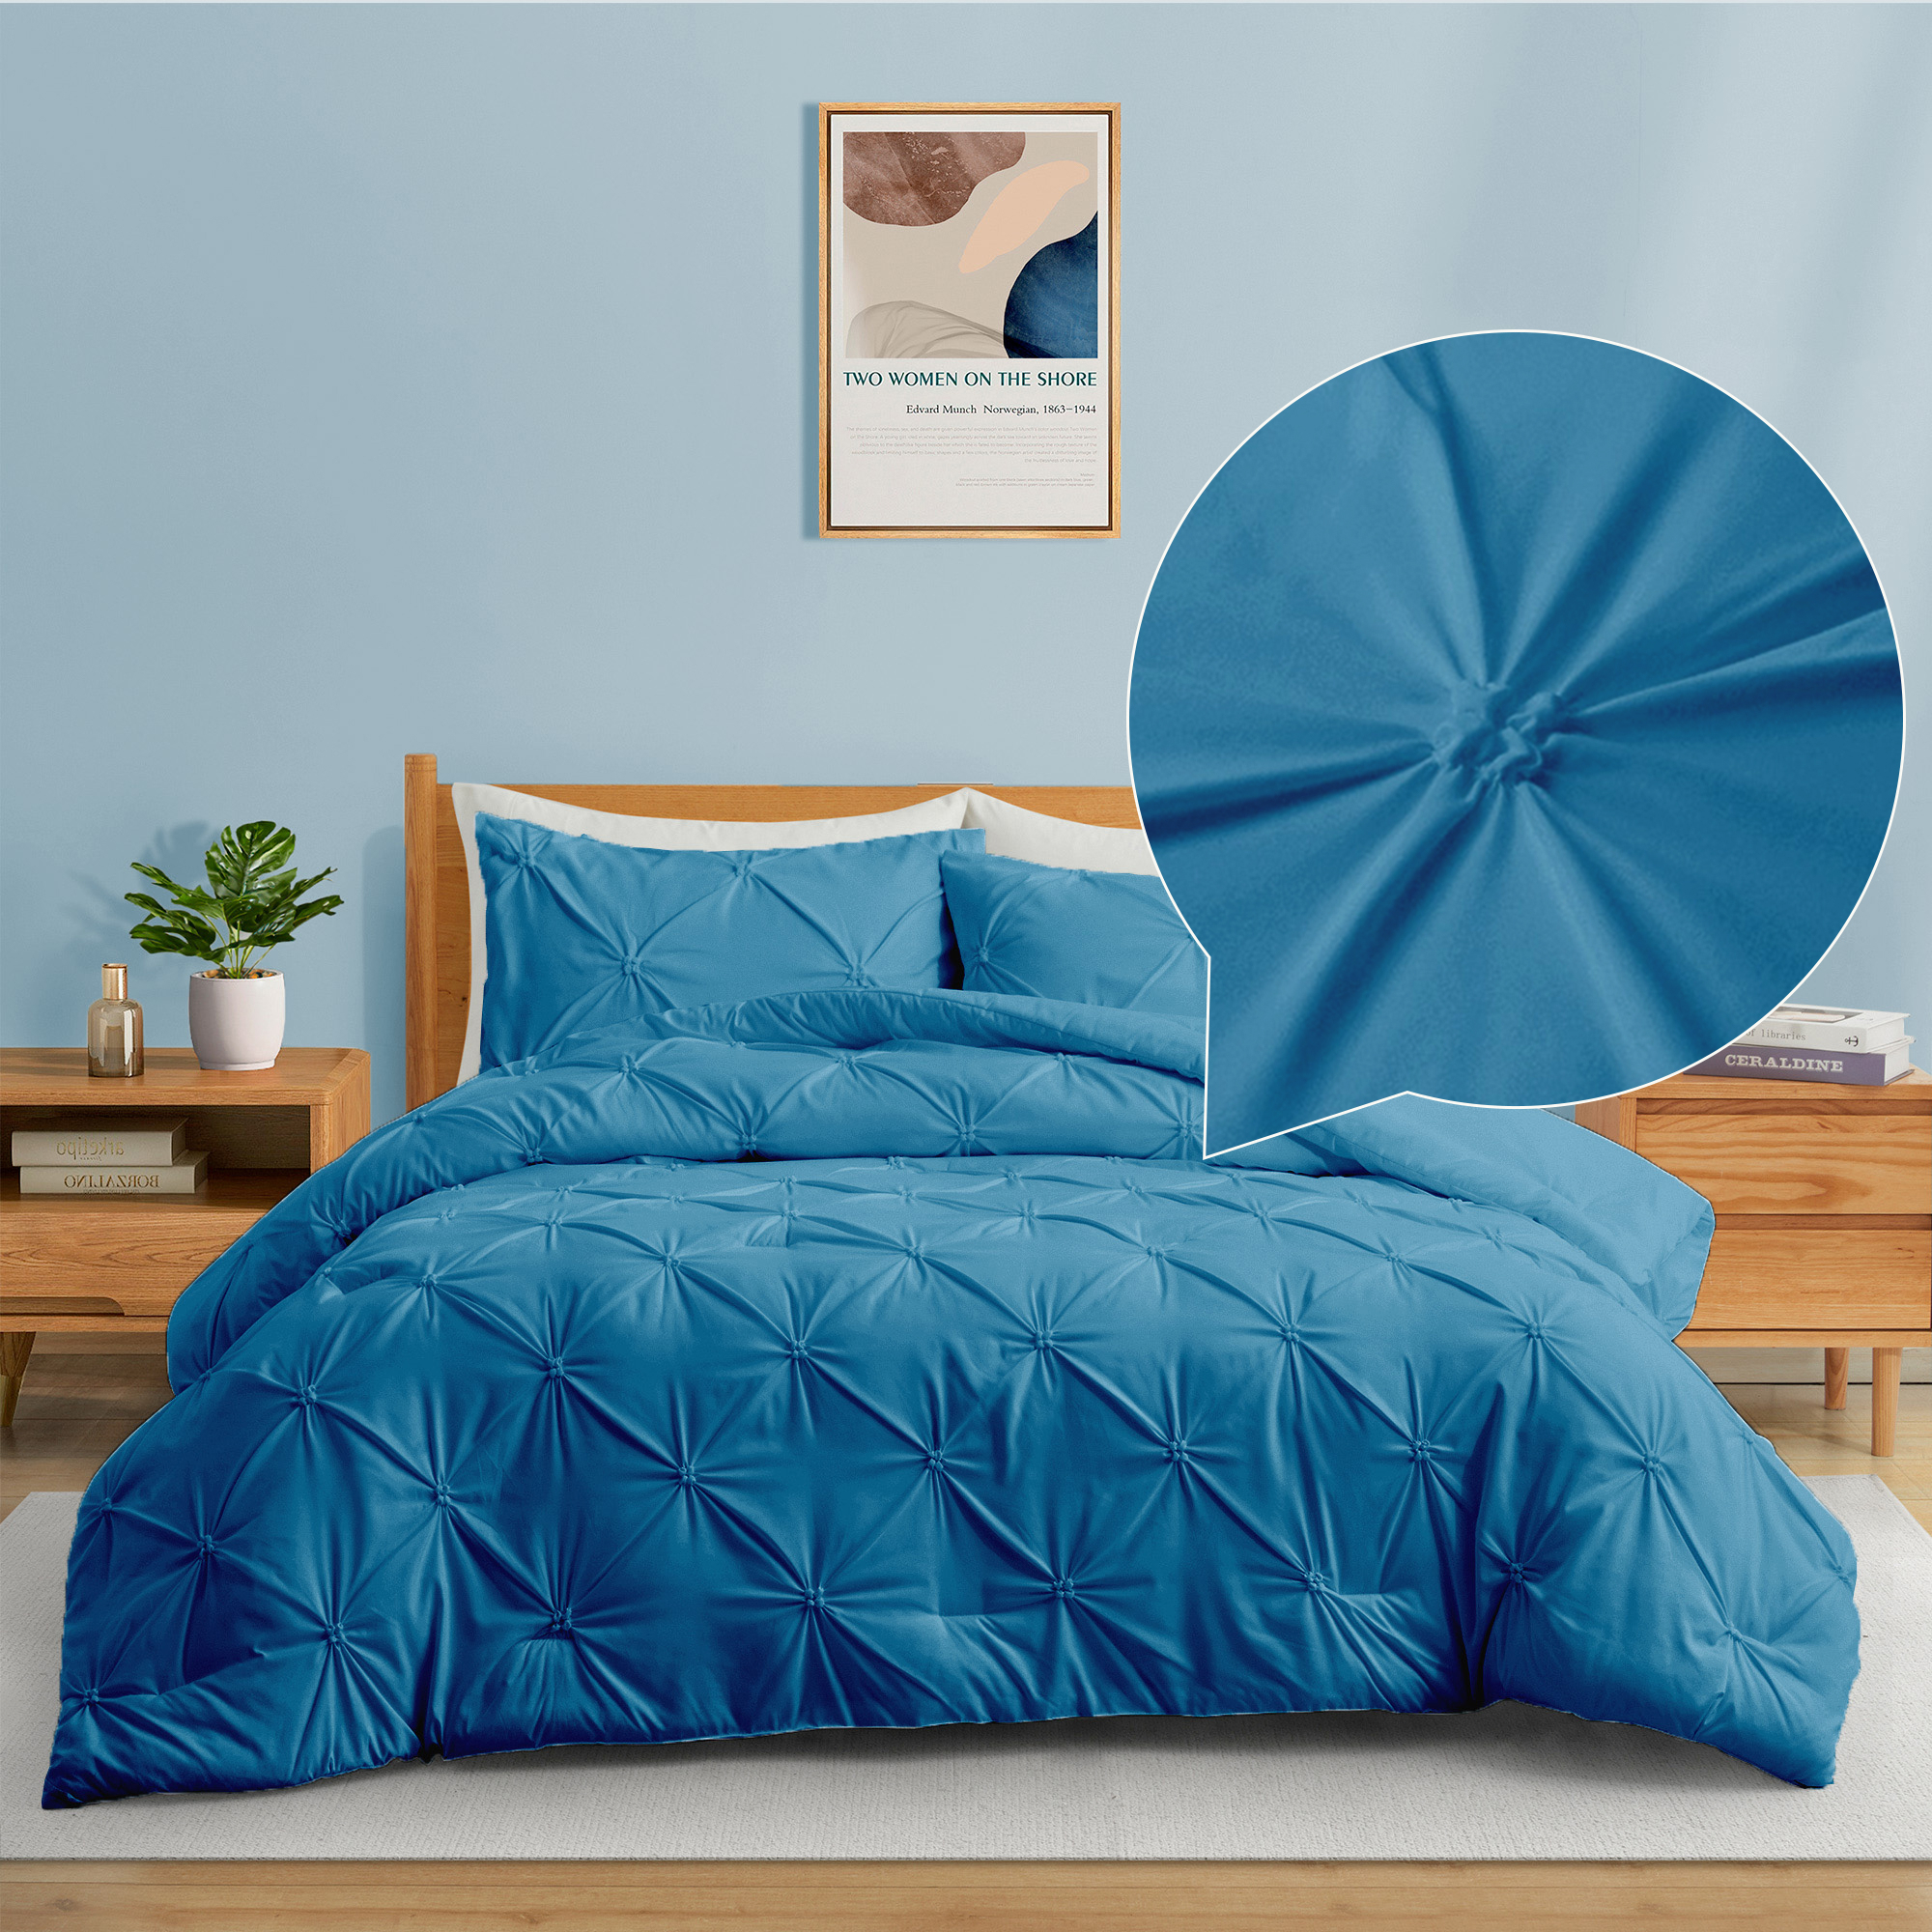 All Seasons Down Alternative Comforter Set, Pinch Pleat Design - Navy Blue, Twin